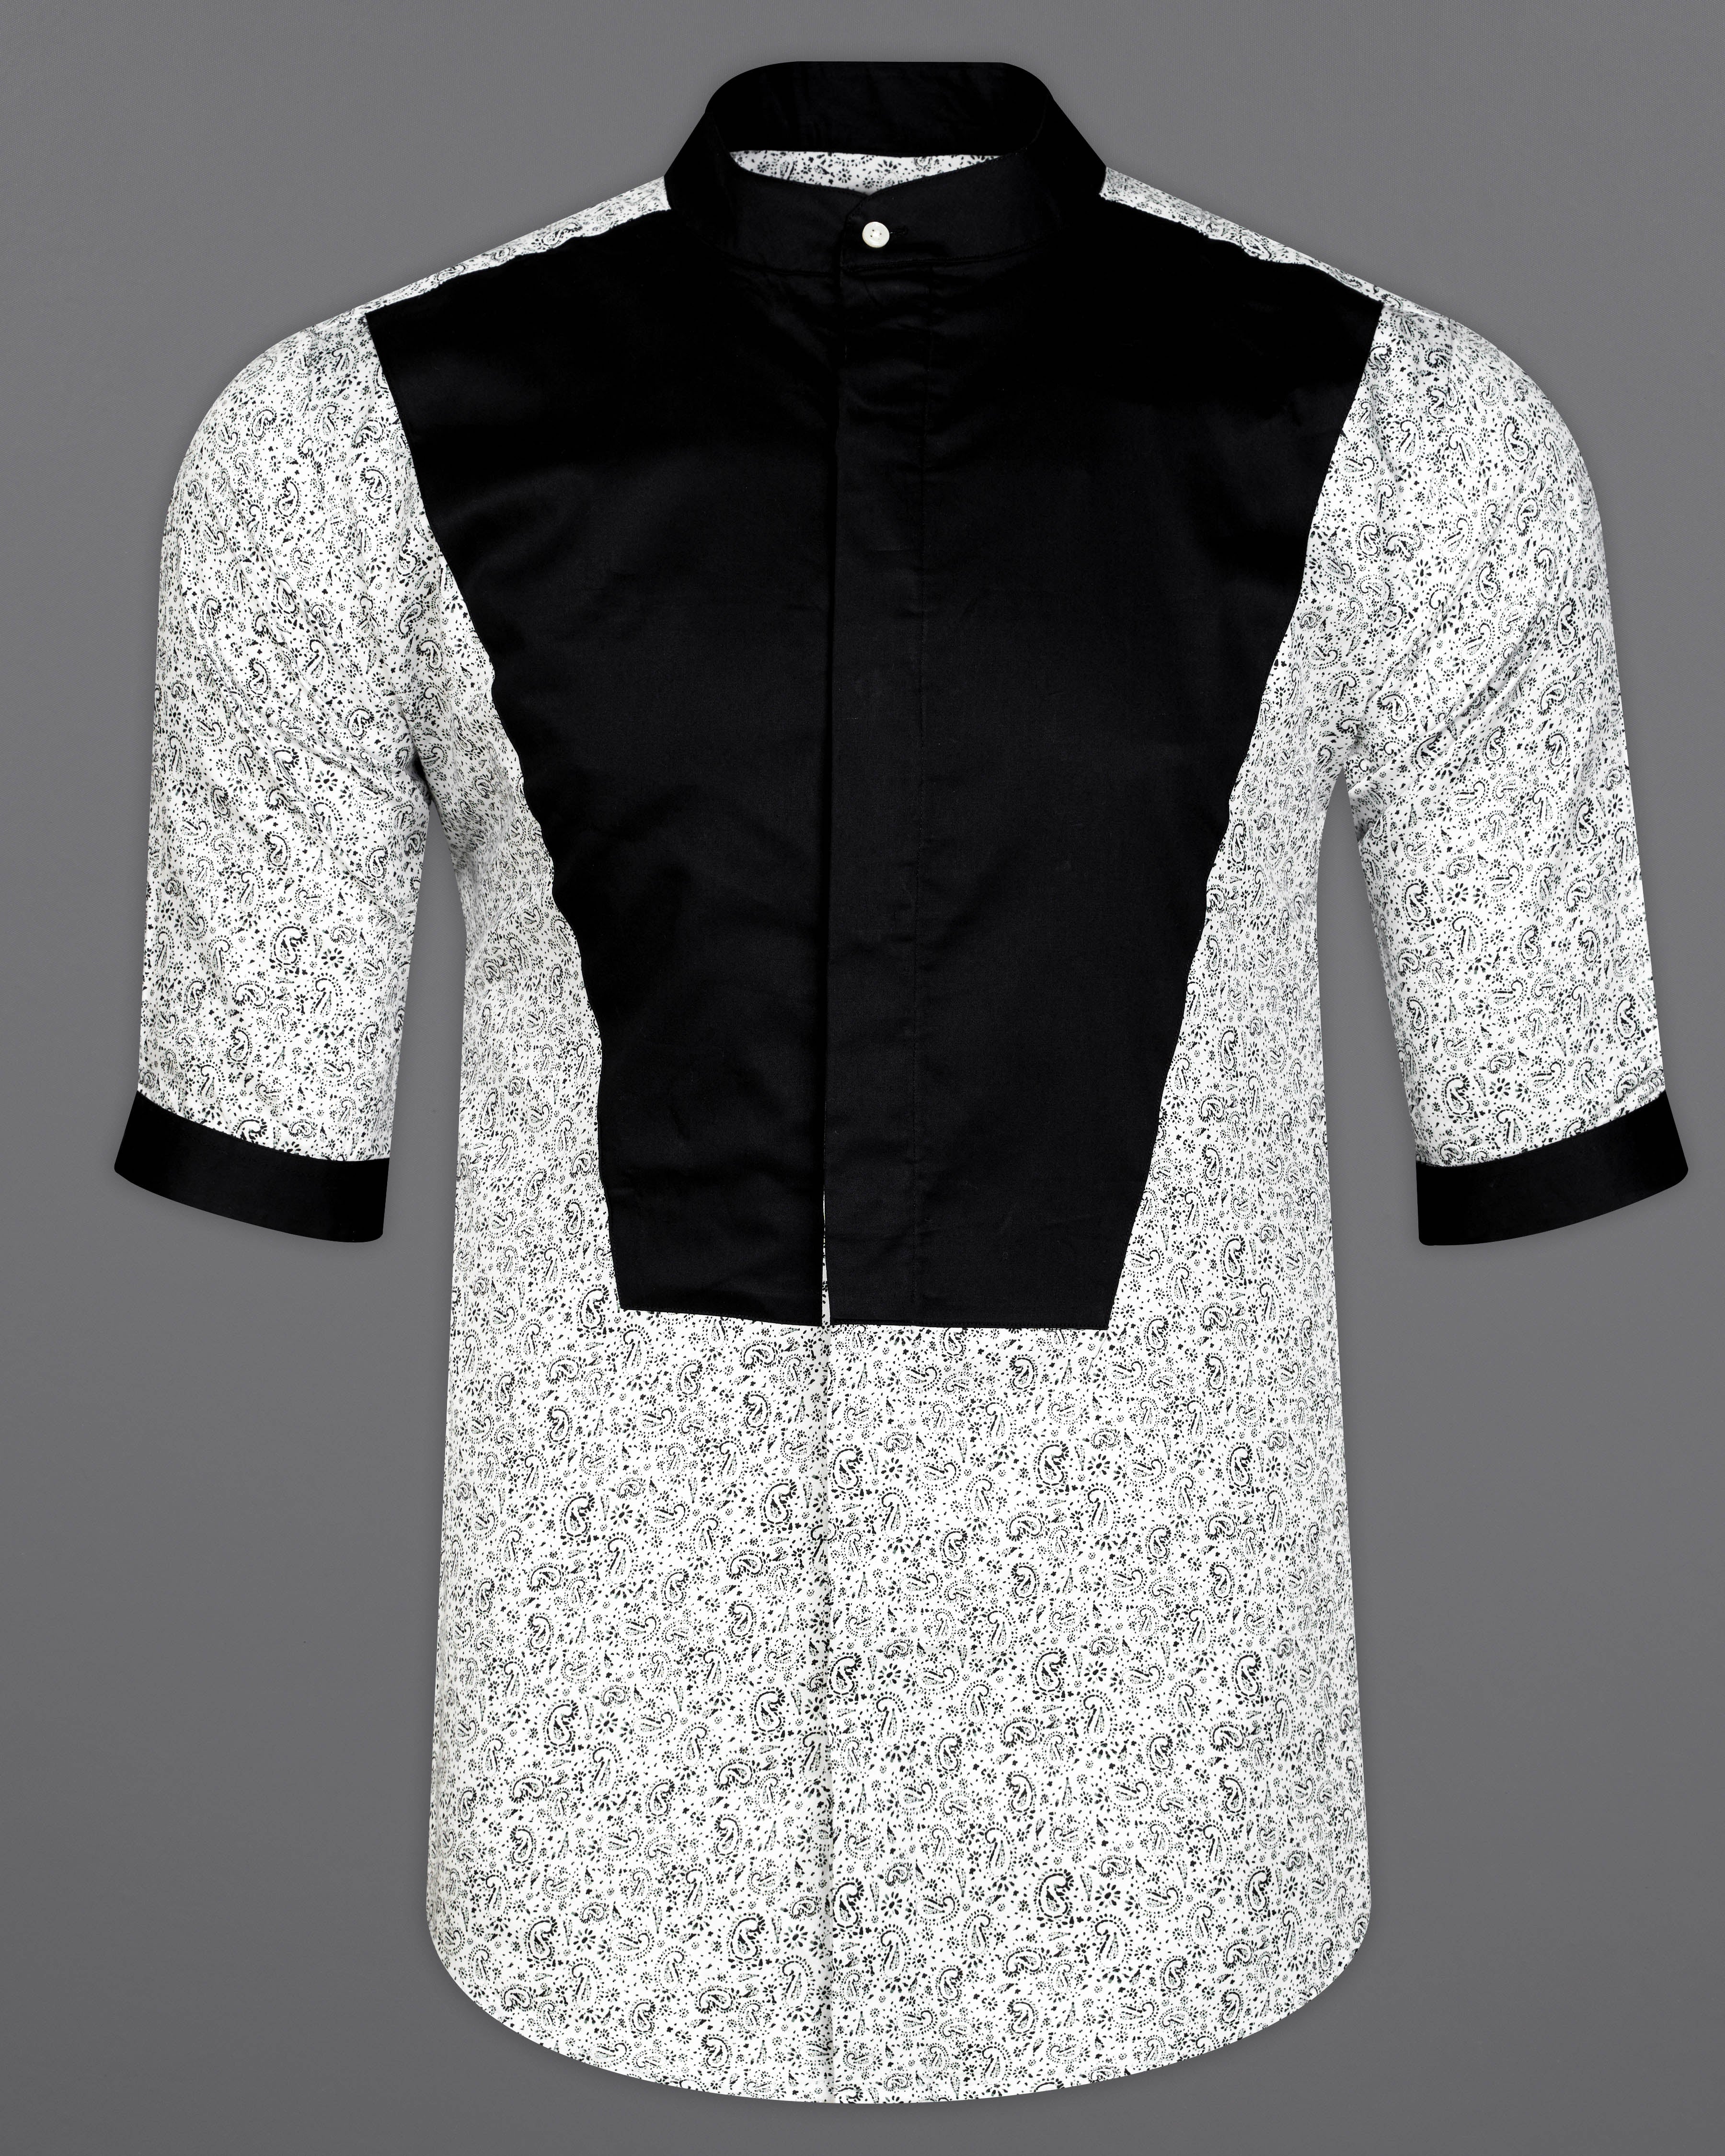 Jade Black and White with Paisley Printed Super Soft Premium Cotton Designer Shirt 9523-M-P221-38, 9523-M-P221-H-38, 9523-M-P221-39, 9523-M-P221-H-39, 9523-M-P221-40, 9523-M-P221-H-40, 9523-M-P221-42, 9523-M-P221-H-42, 9523-M-P221-44, 9523-M-P221-H-44, 9523-M-P221-46, 9523-M-P221-H-46, 9523-M-P221-48, 9523-M-P221-H-48, 9523-M-P221-50, 9523-M-P221-H-50, 9523-M-P221-52, 9523-M-P221-H-52